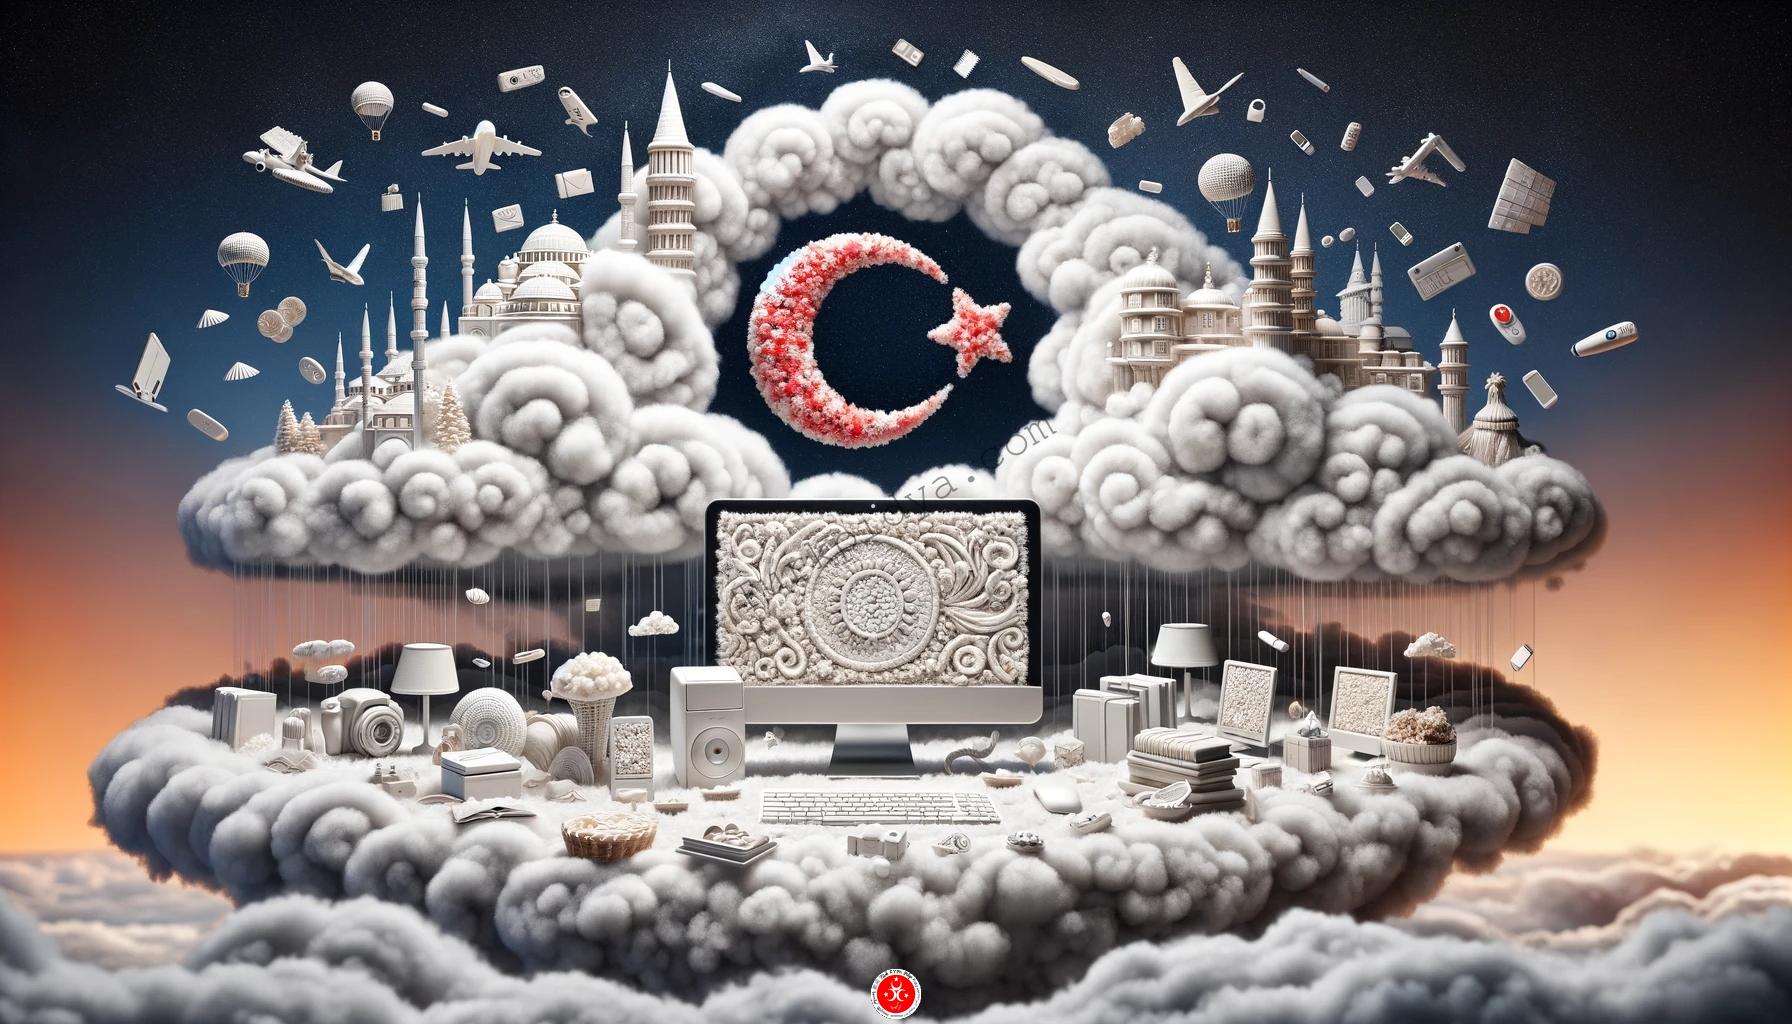 Online kopen in Turkije